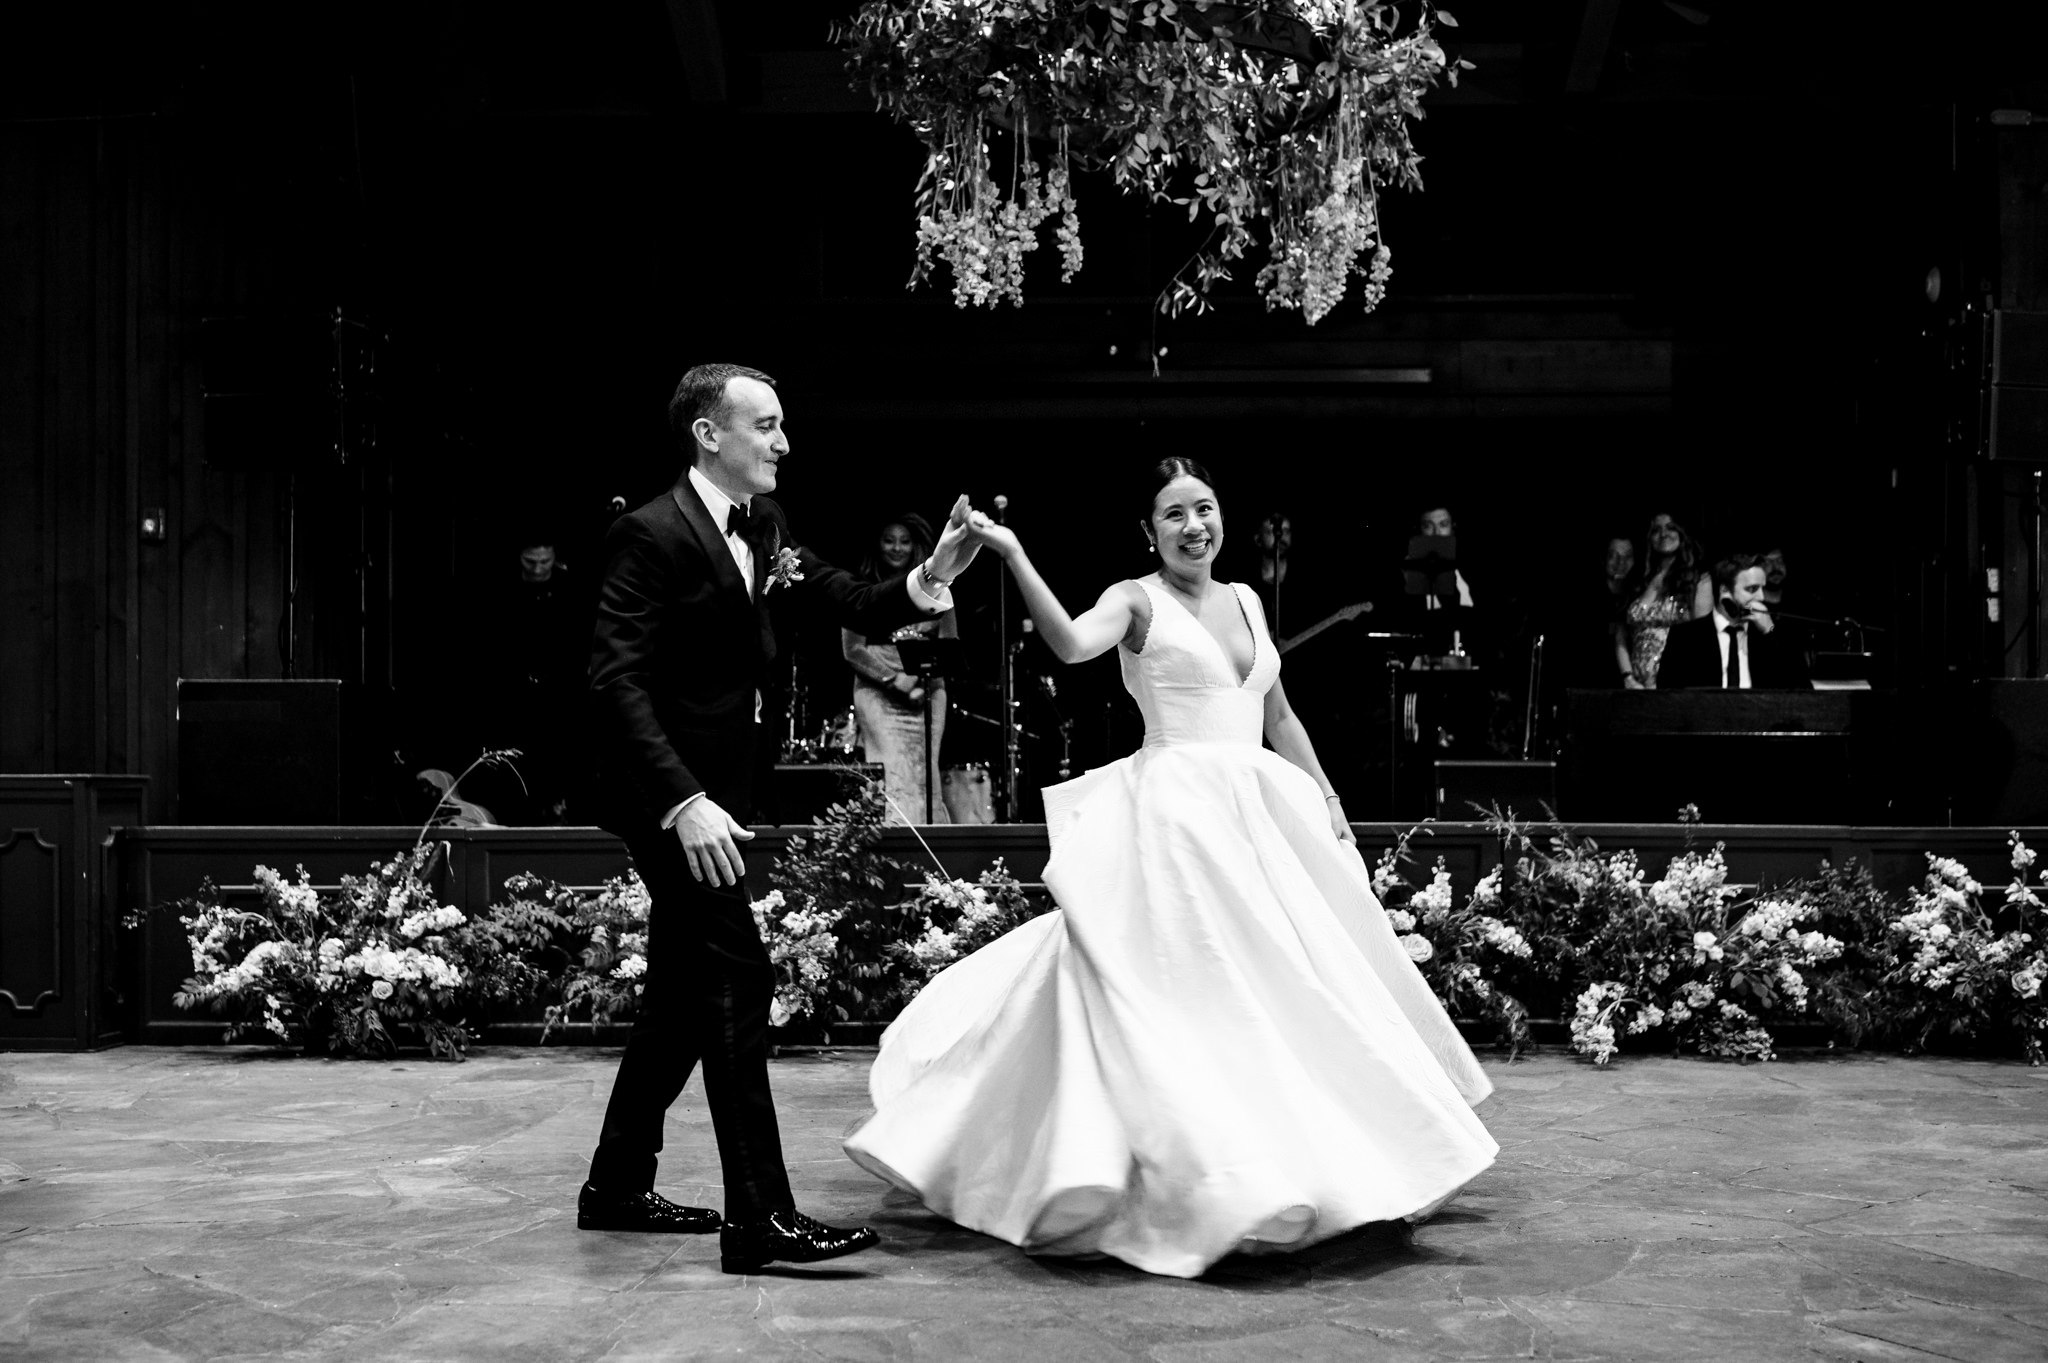 A bride and groom dancing at a farm wedding.